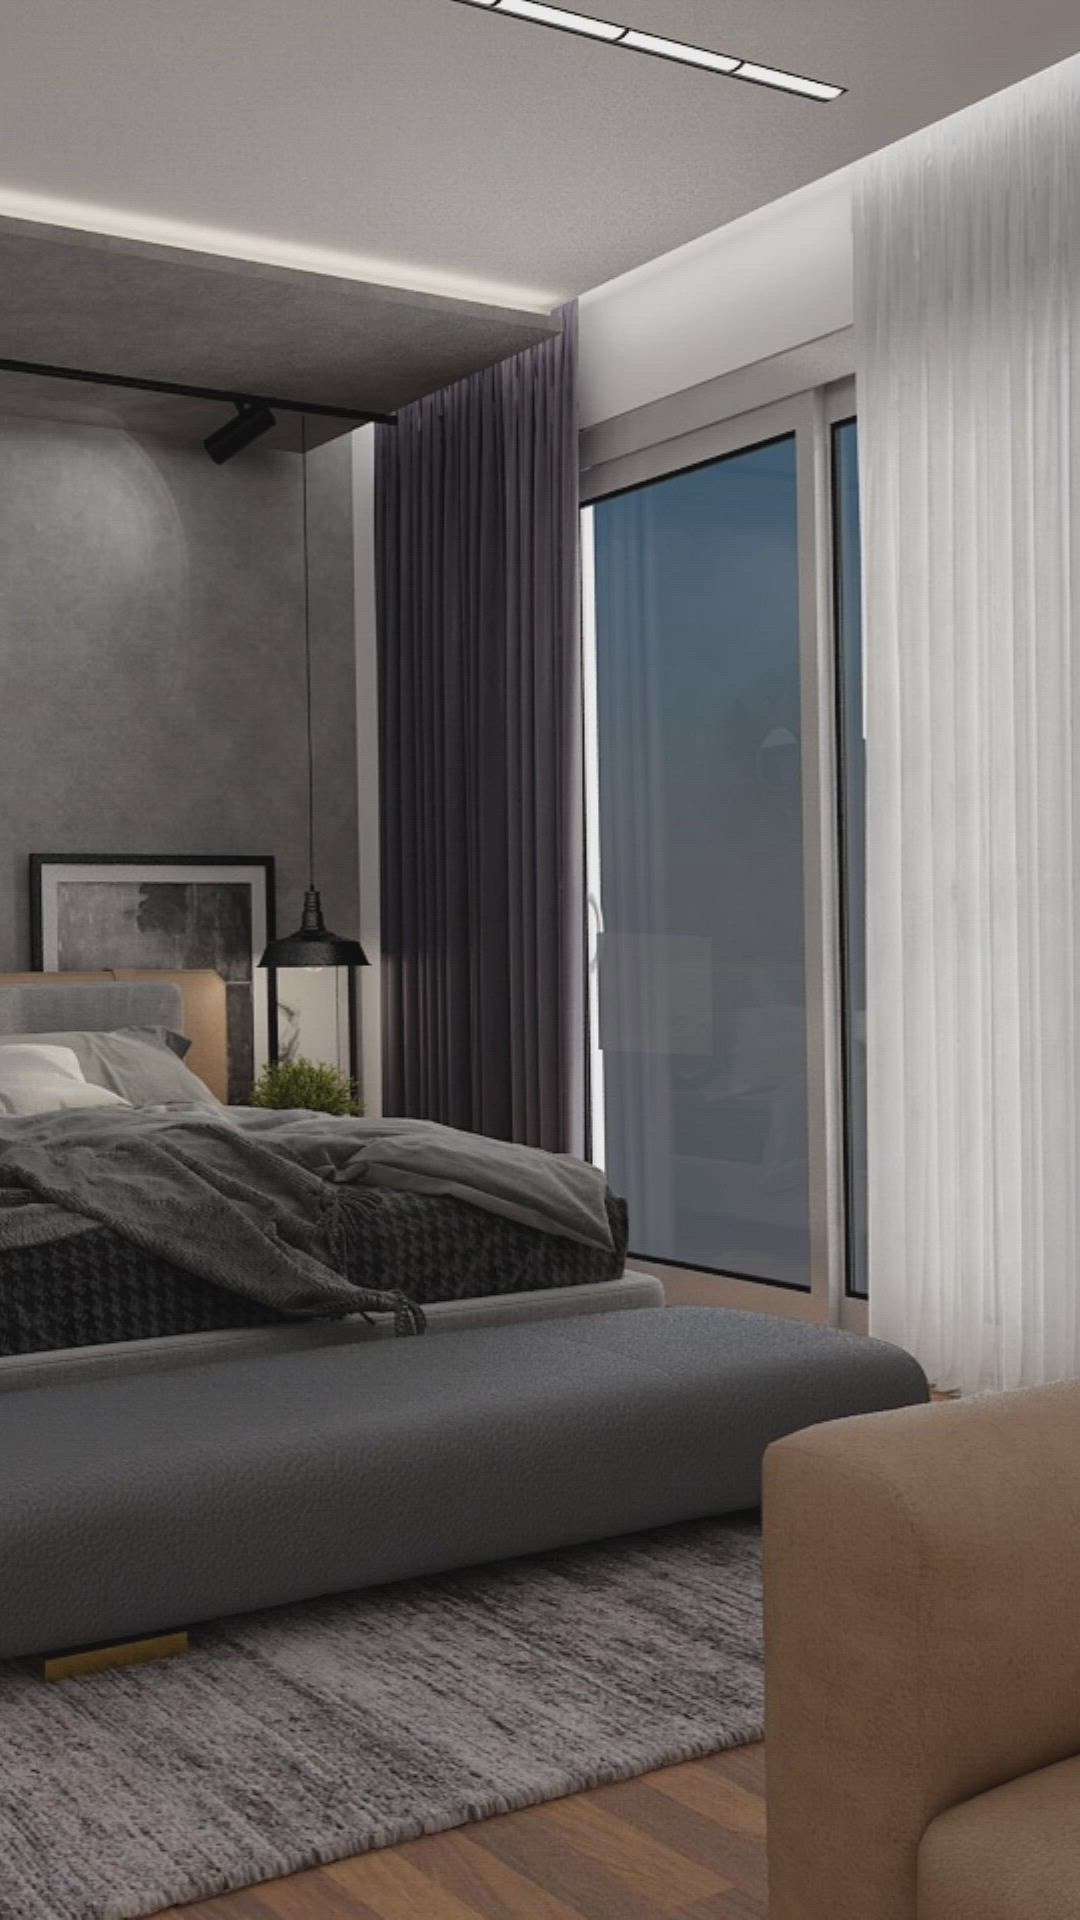 Apartment Bedroom Design ✨ #bedroomdesign #architectureinteriors #apartmentdecor #sweethome #kolo #facebook #instagram #bedroomdecor